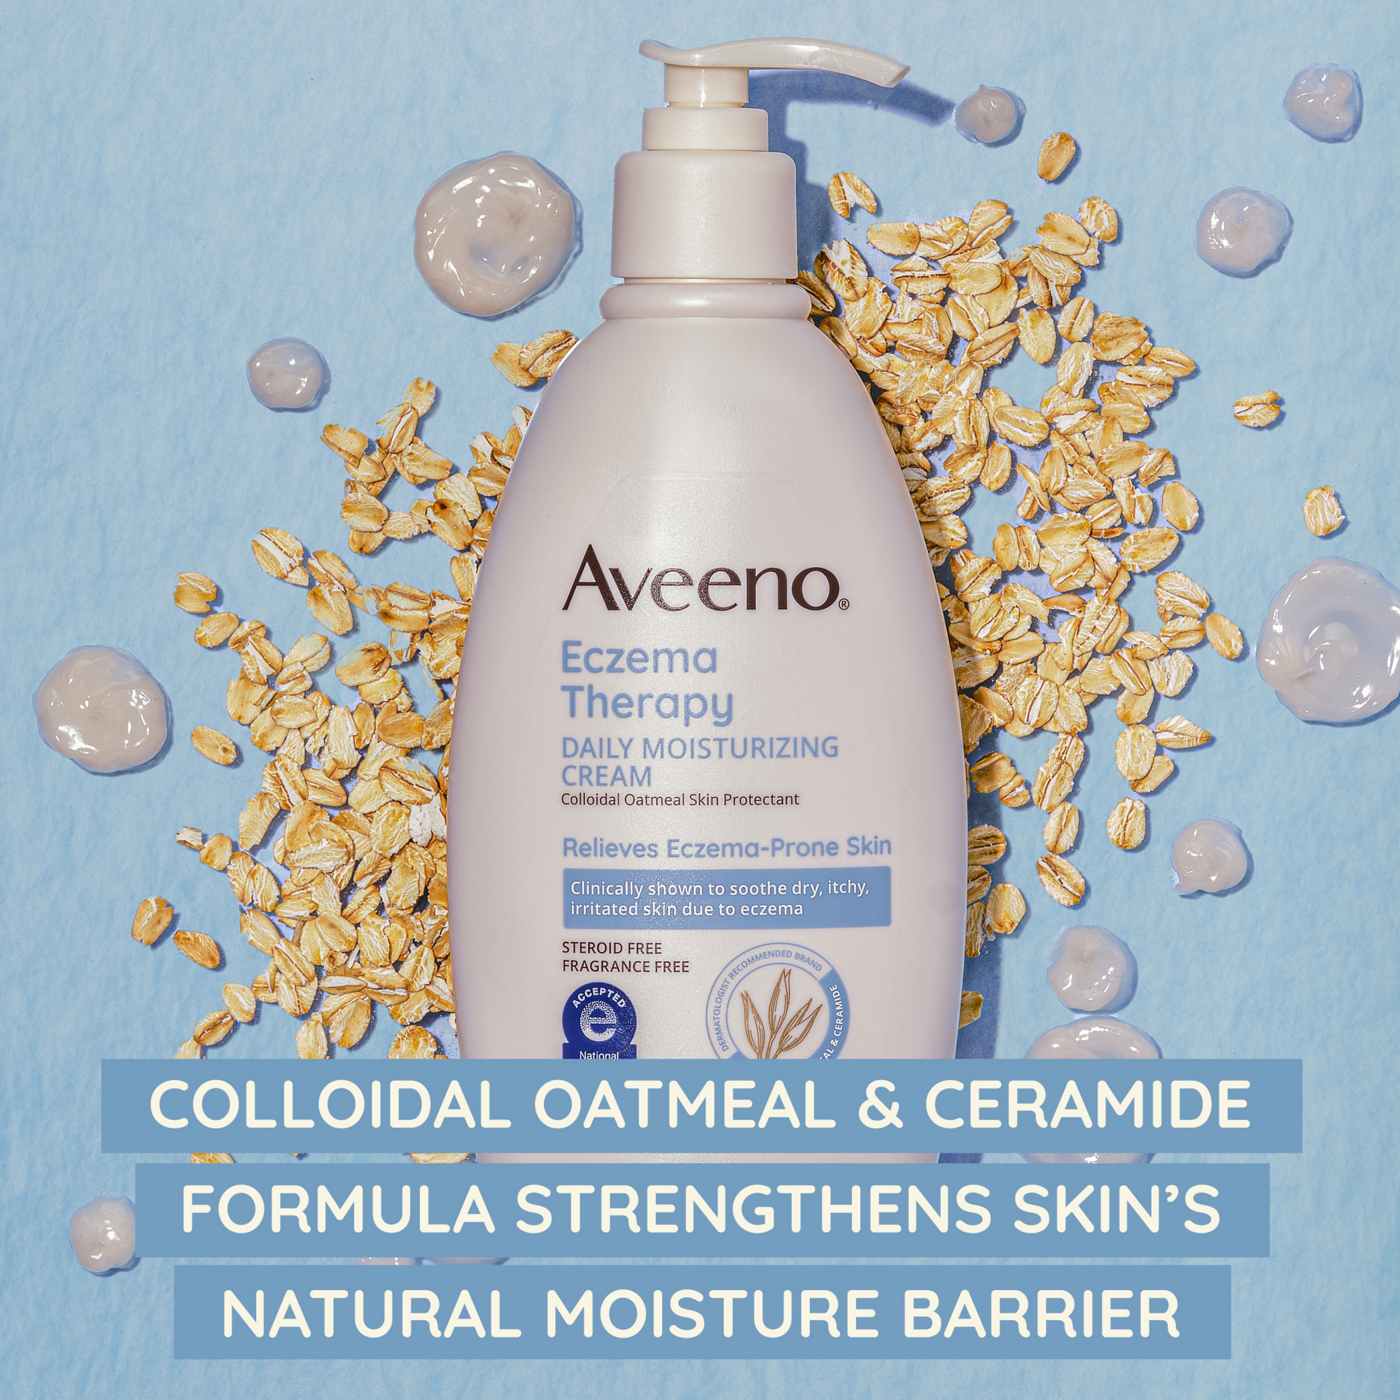 Aveeno Eczema Therapy Daily Moisturizing Cream; image 3 of 6